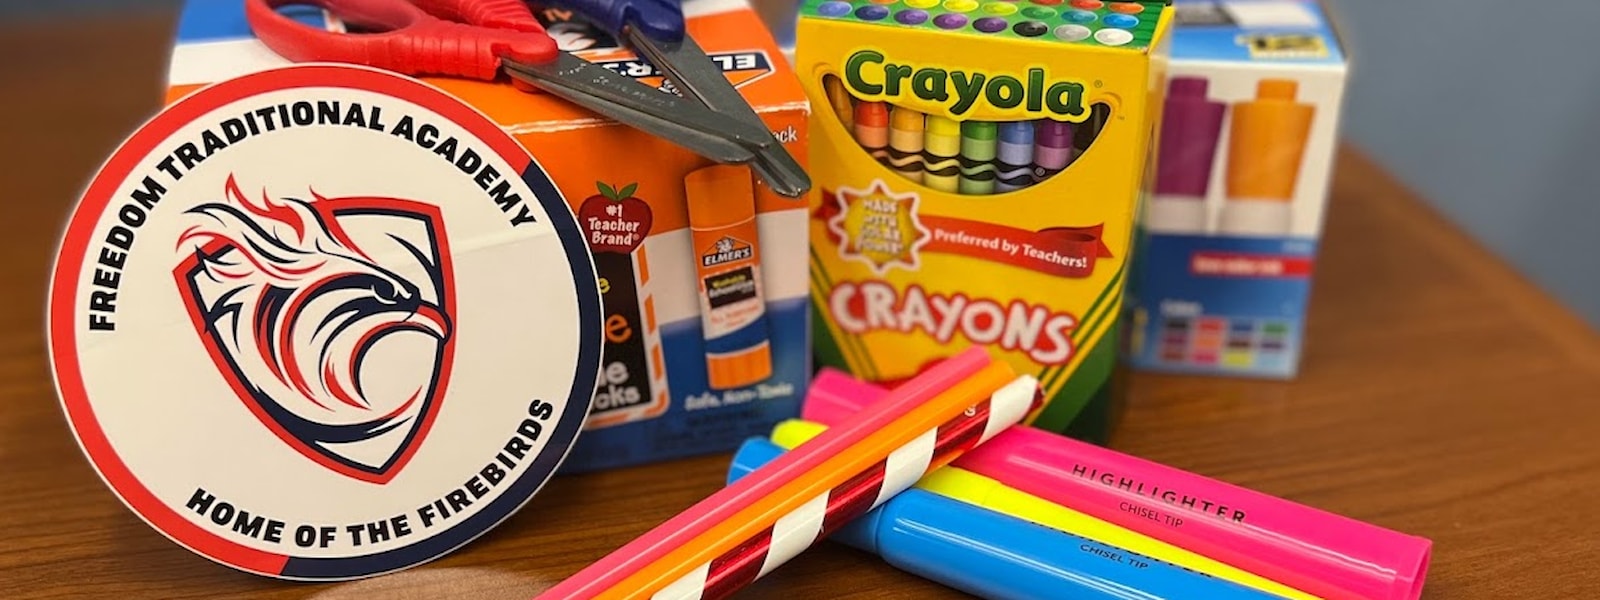 school supplies on desk 